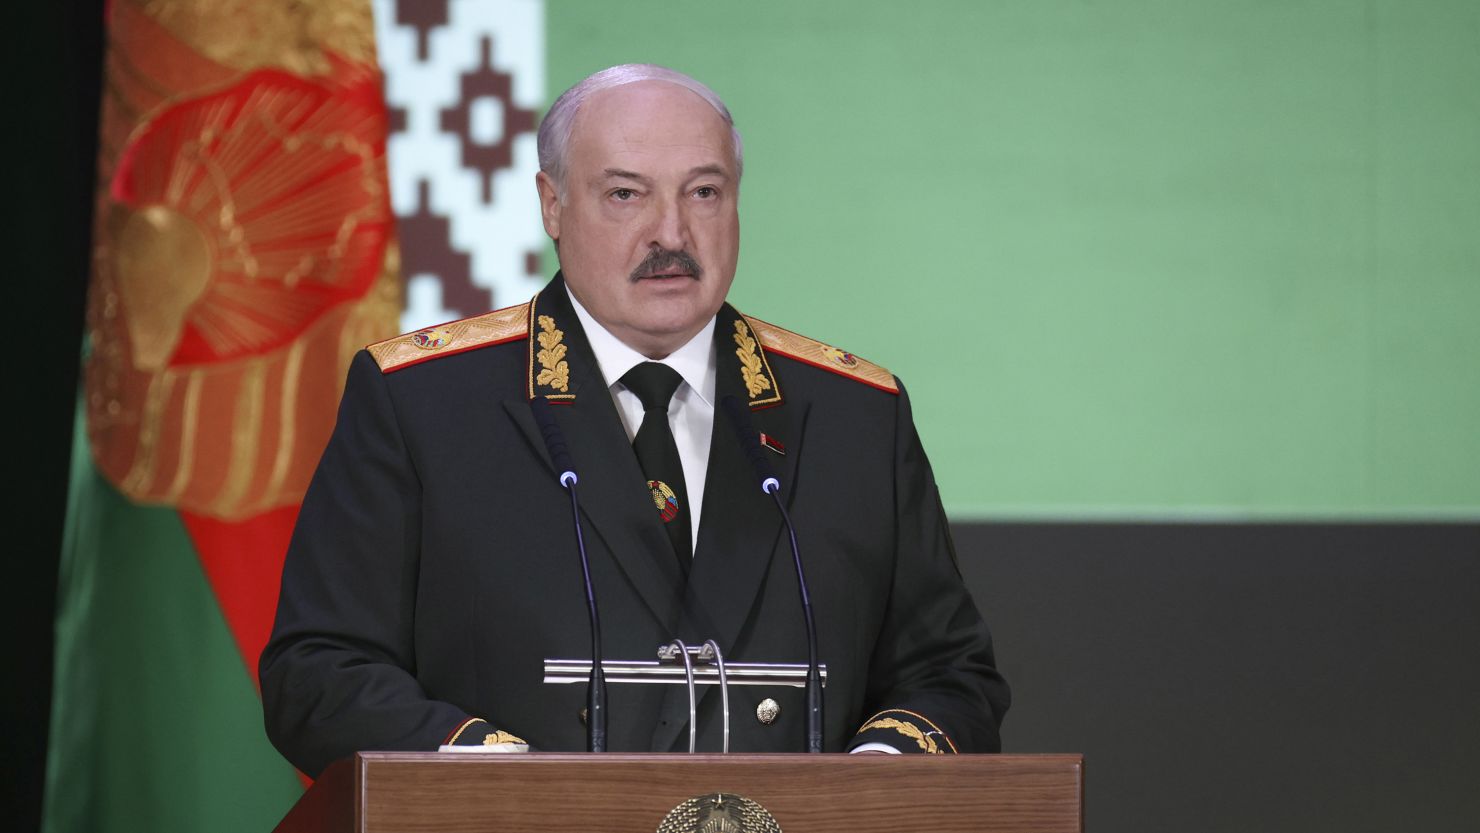 Lukashenko reaffirms presidential bid amidst U.S. criticism (Credits: CNN)